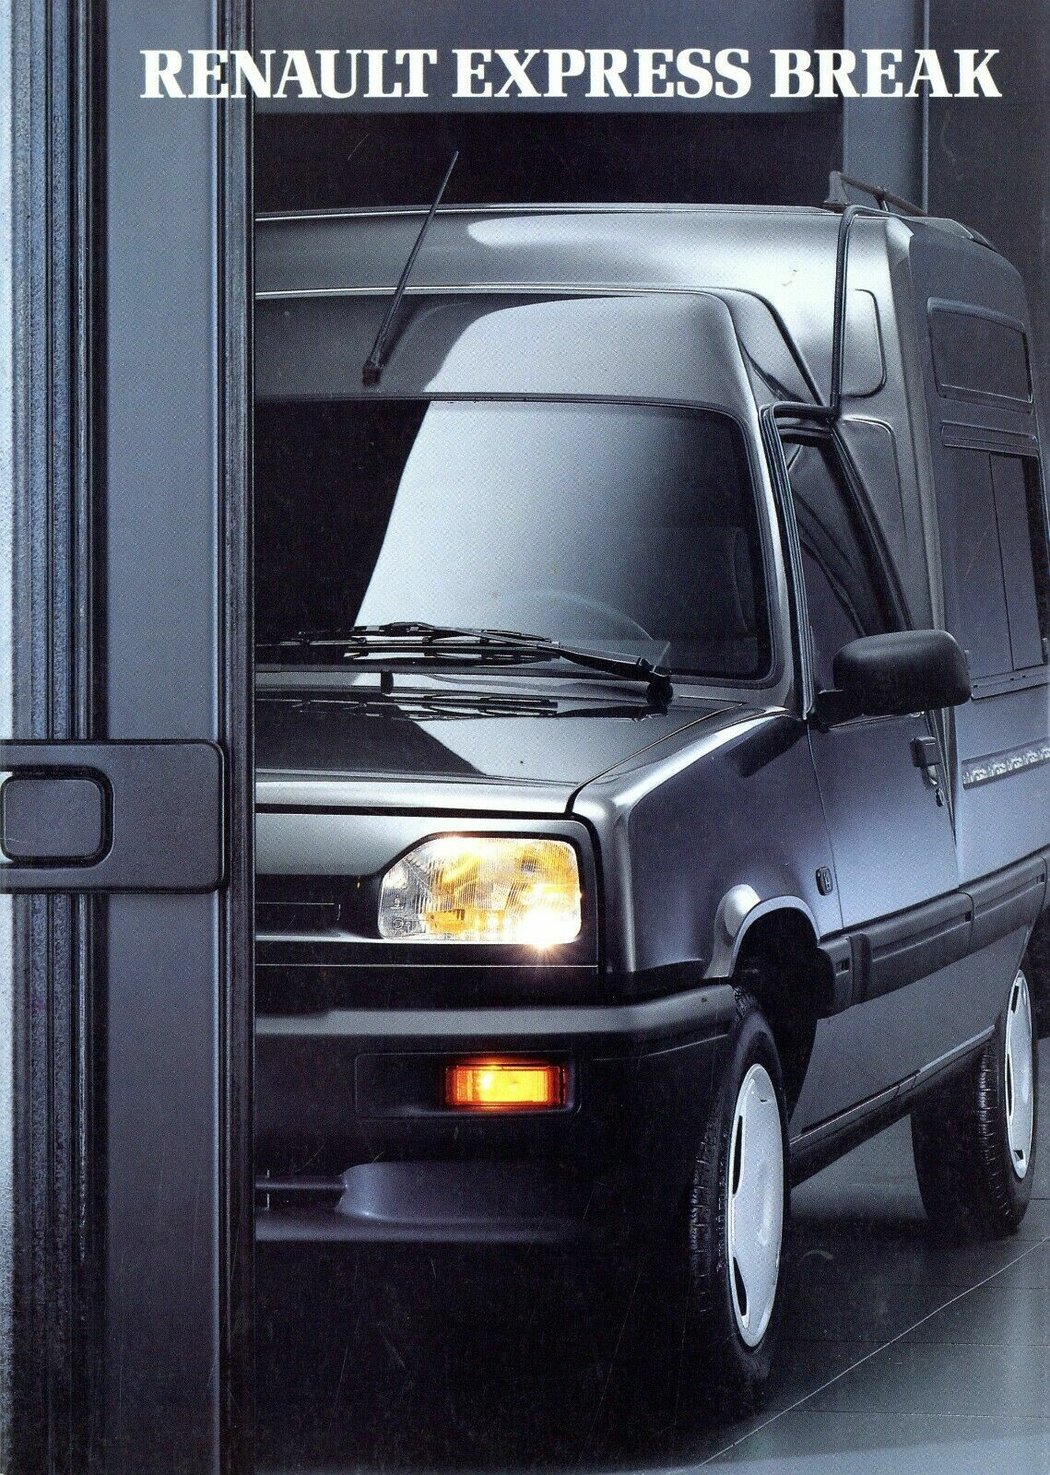 Renault Express Break (1991)